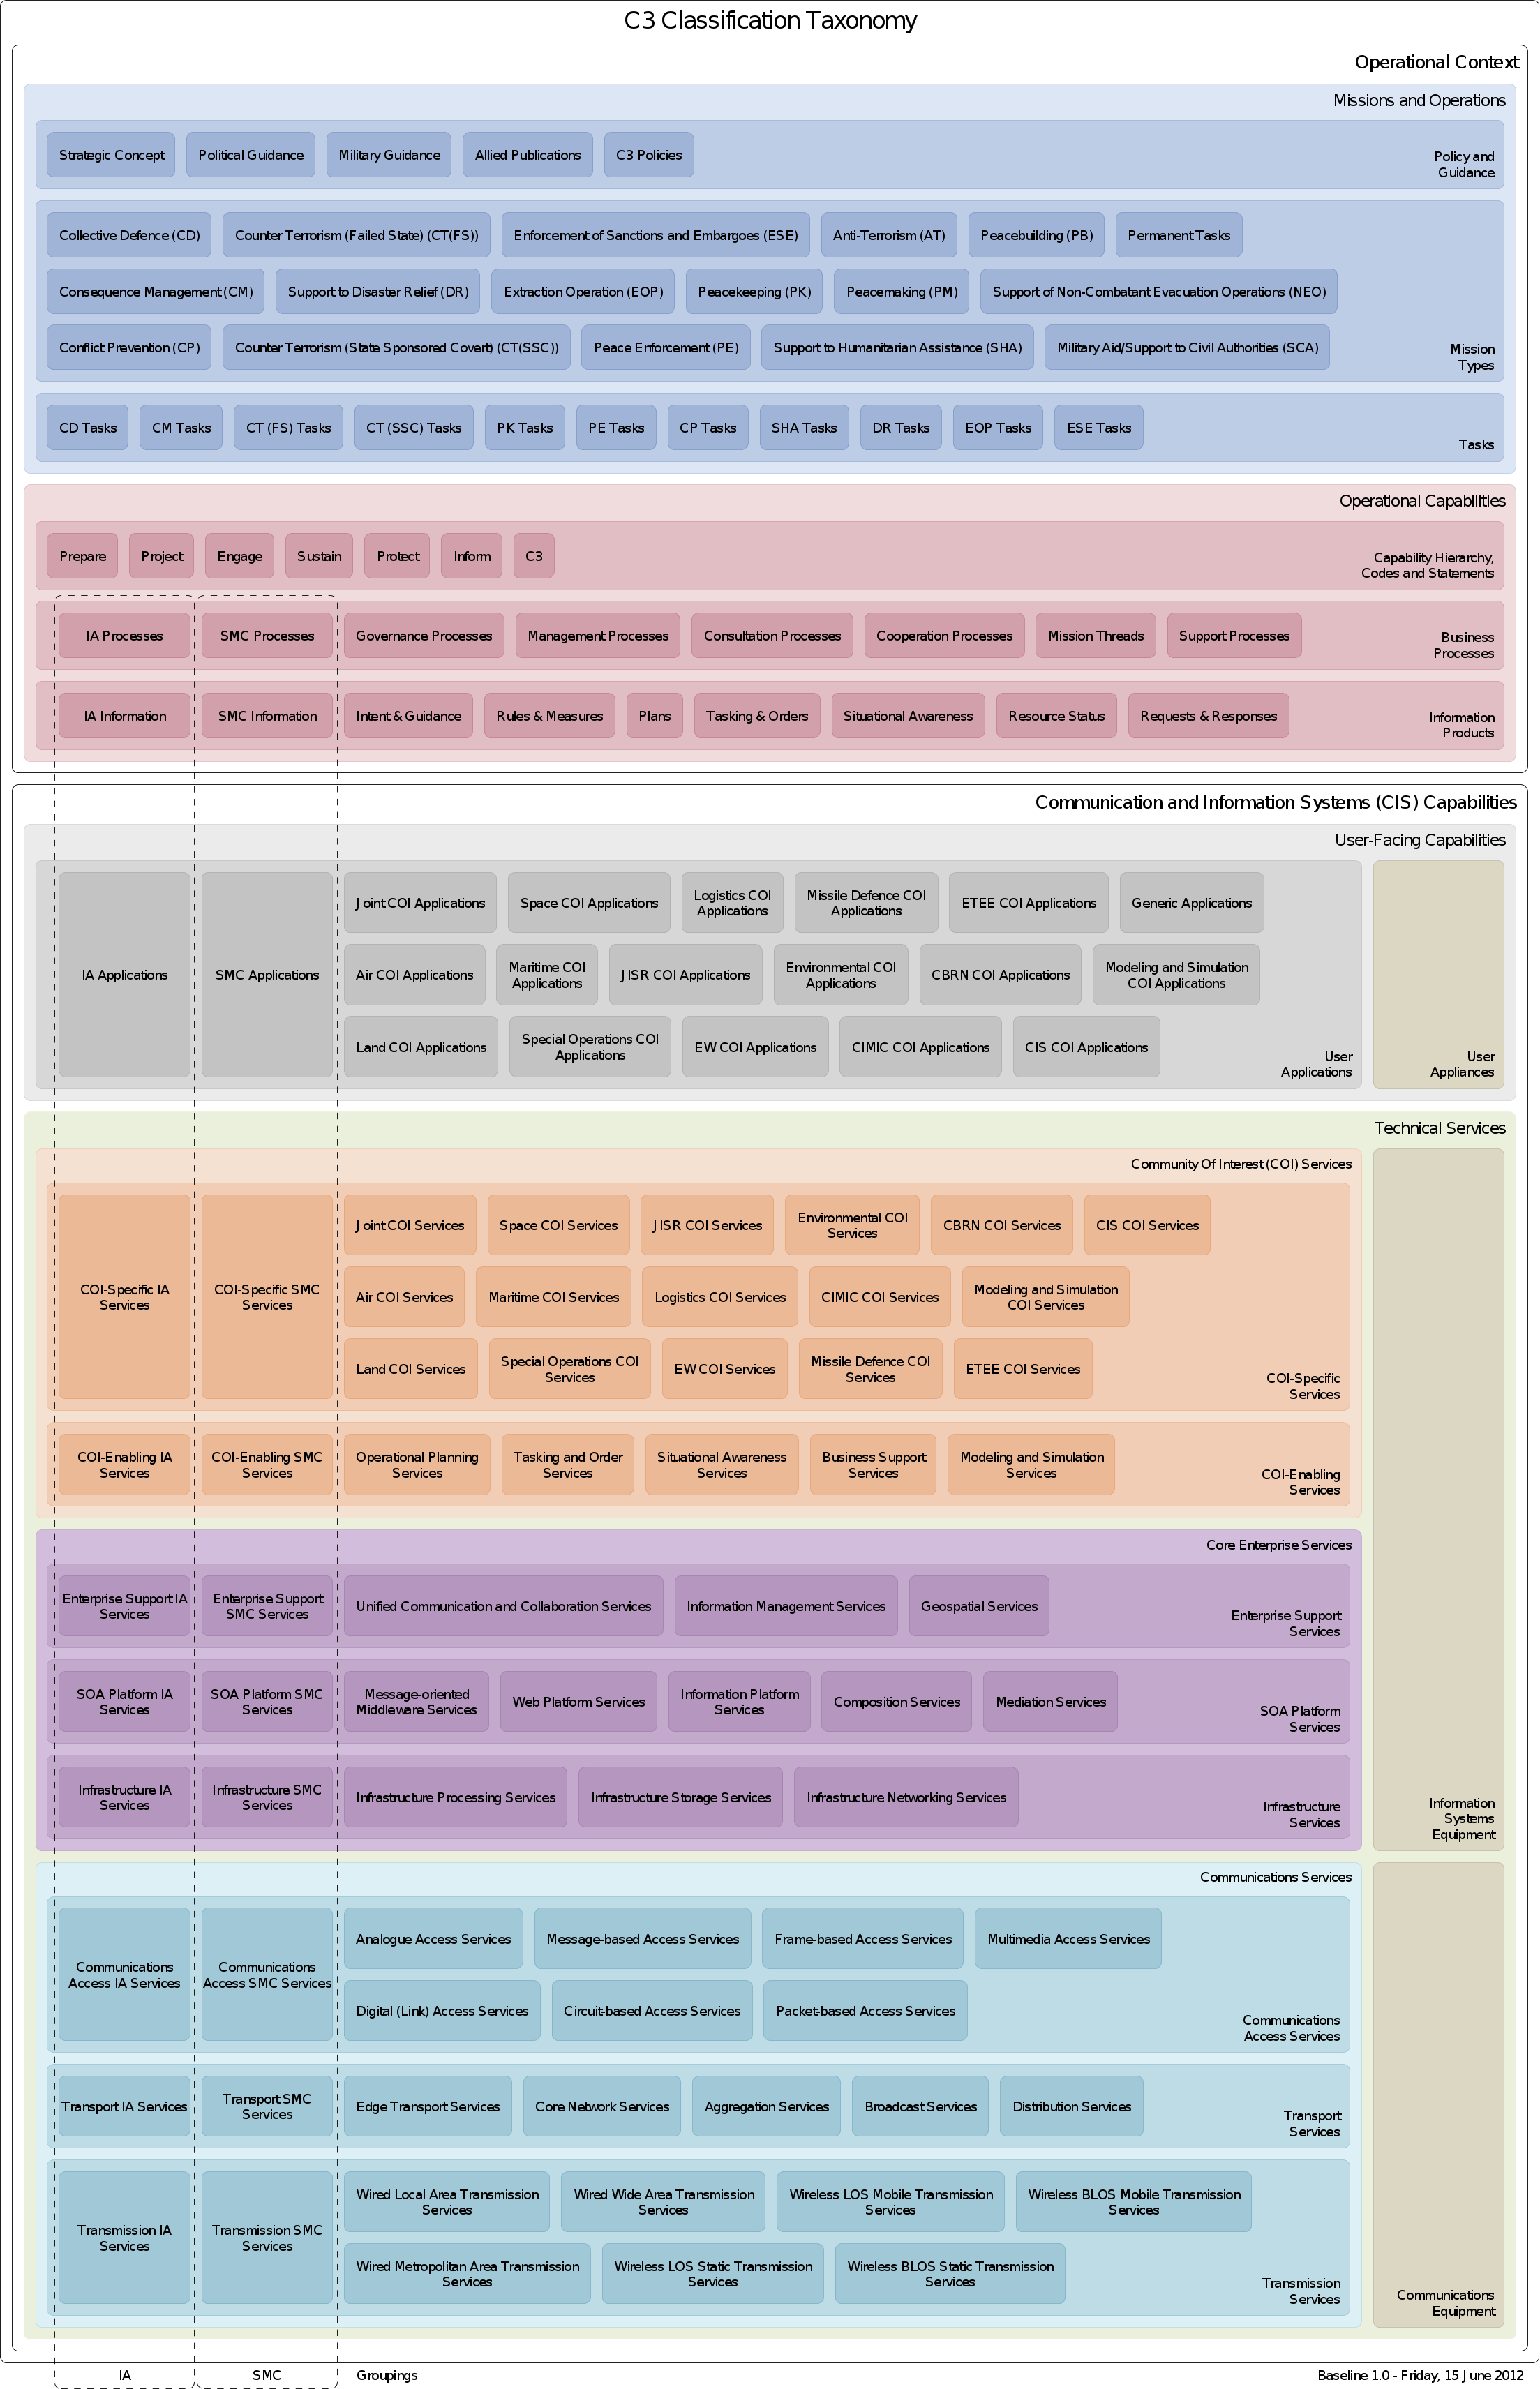 C3 Classification Taxonomy